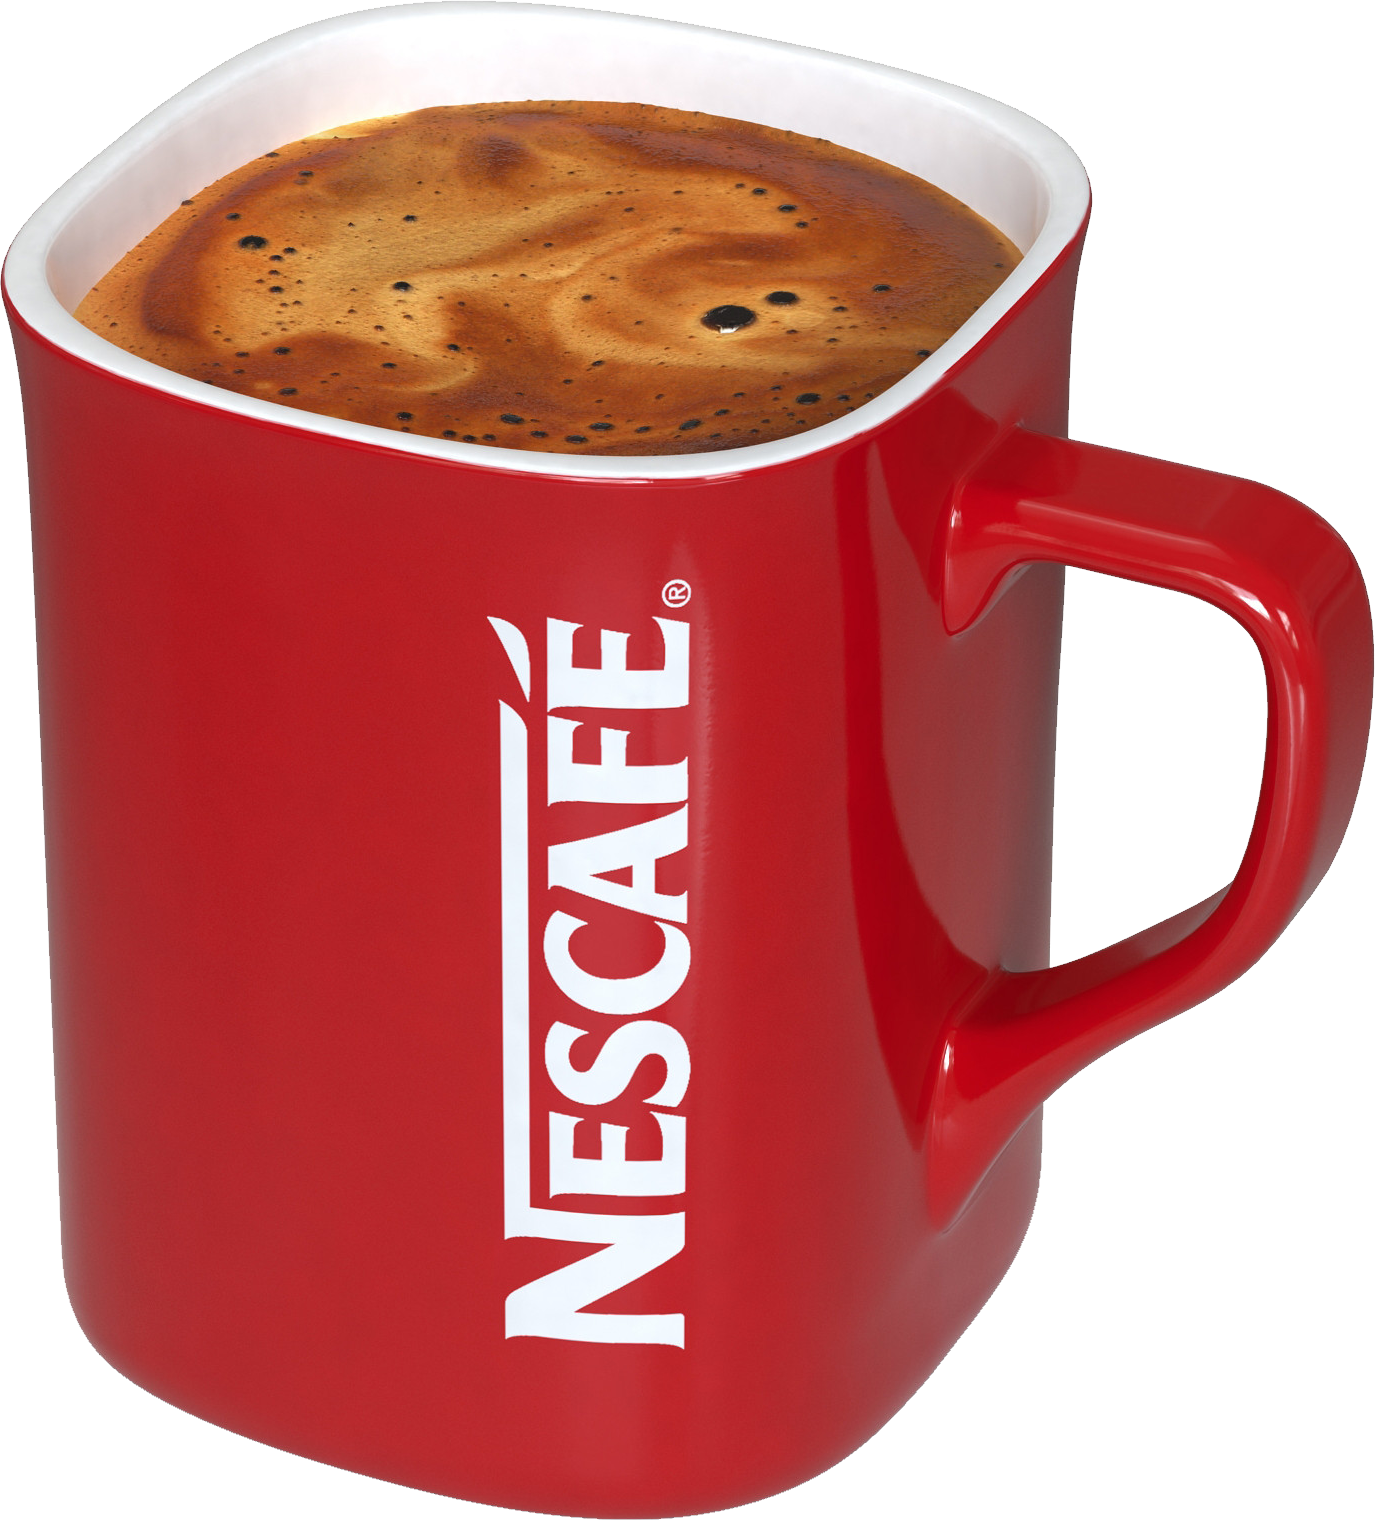 Coffee Mug PNG Image Background